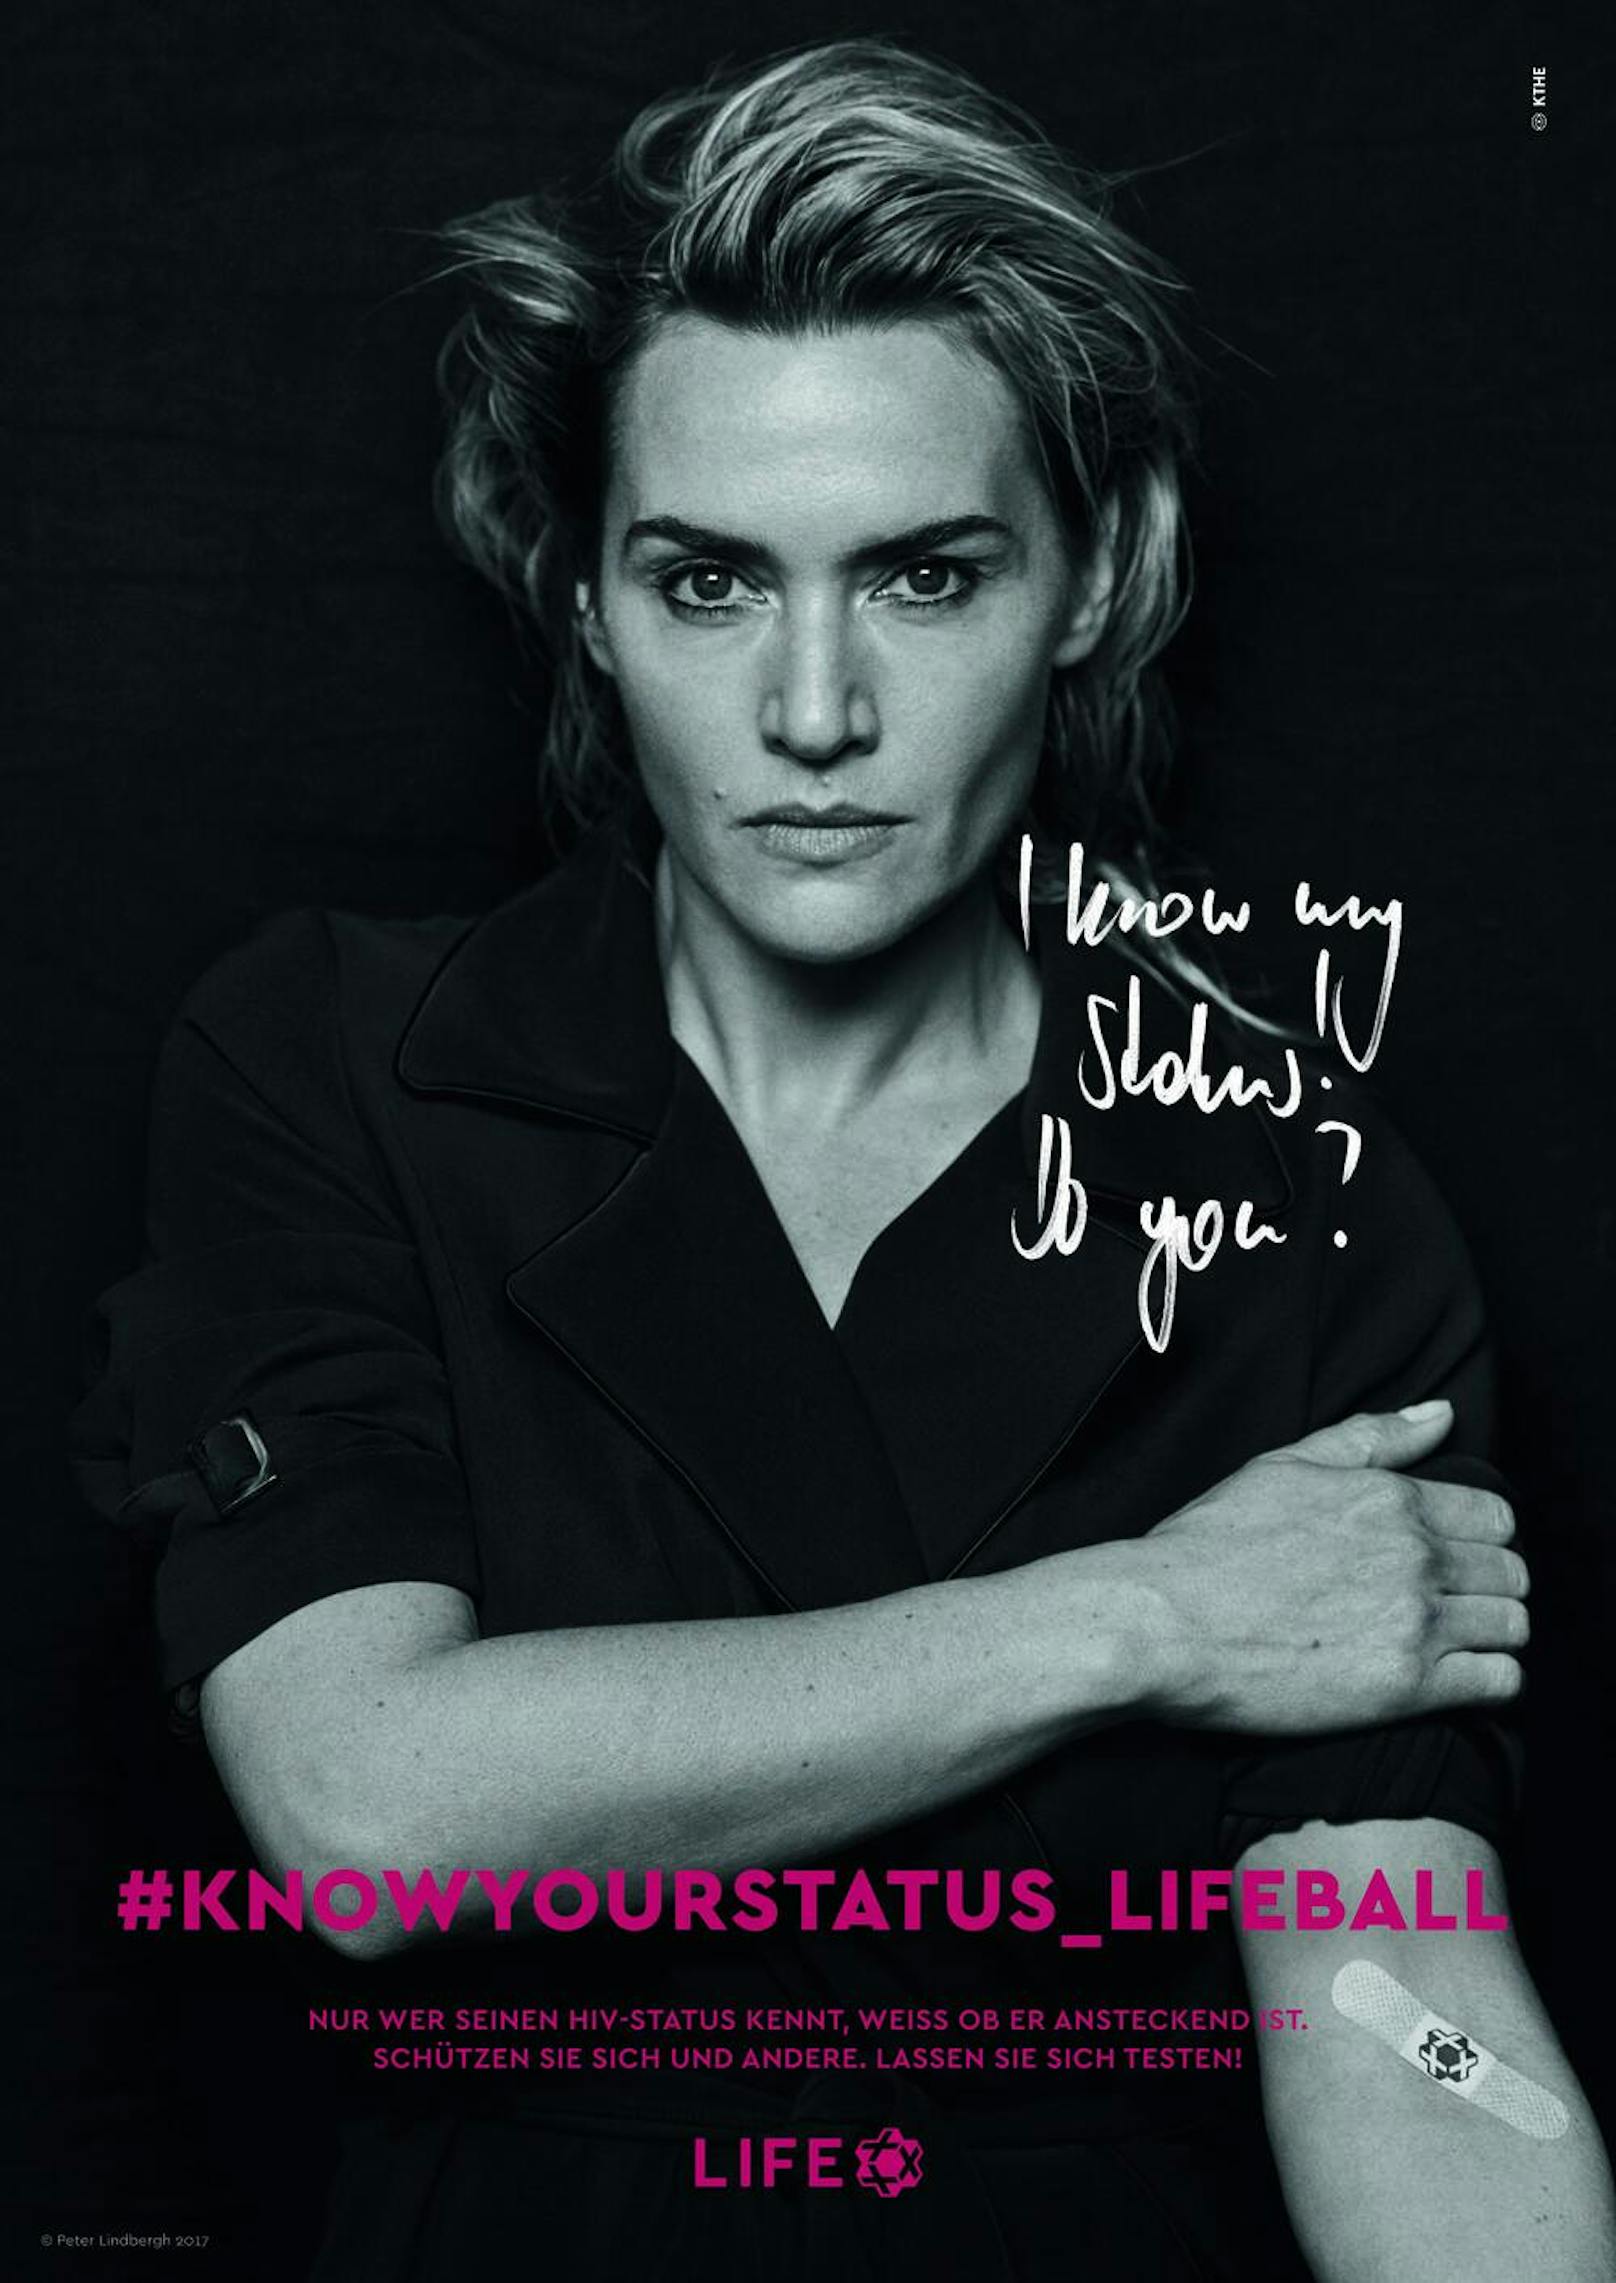 Die "Life+" Kampagne "Know Your Status" - mit Kate Winslet 